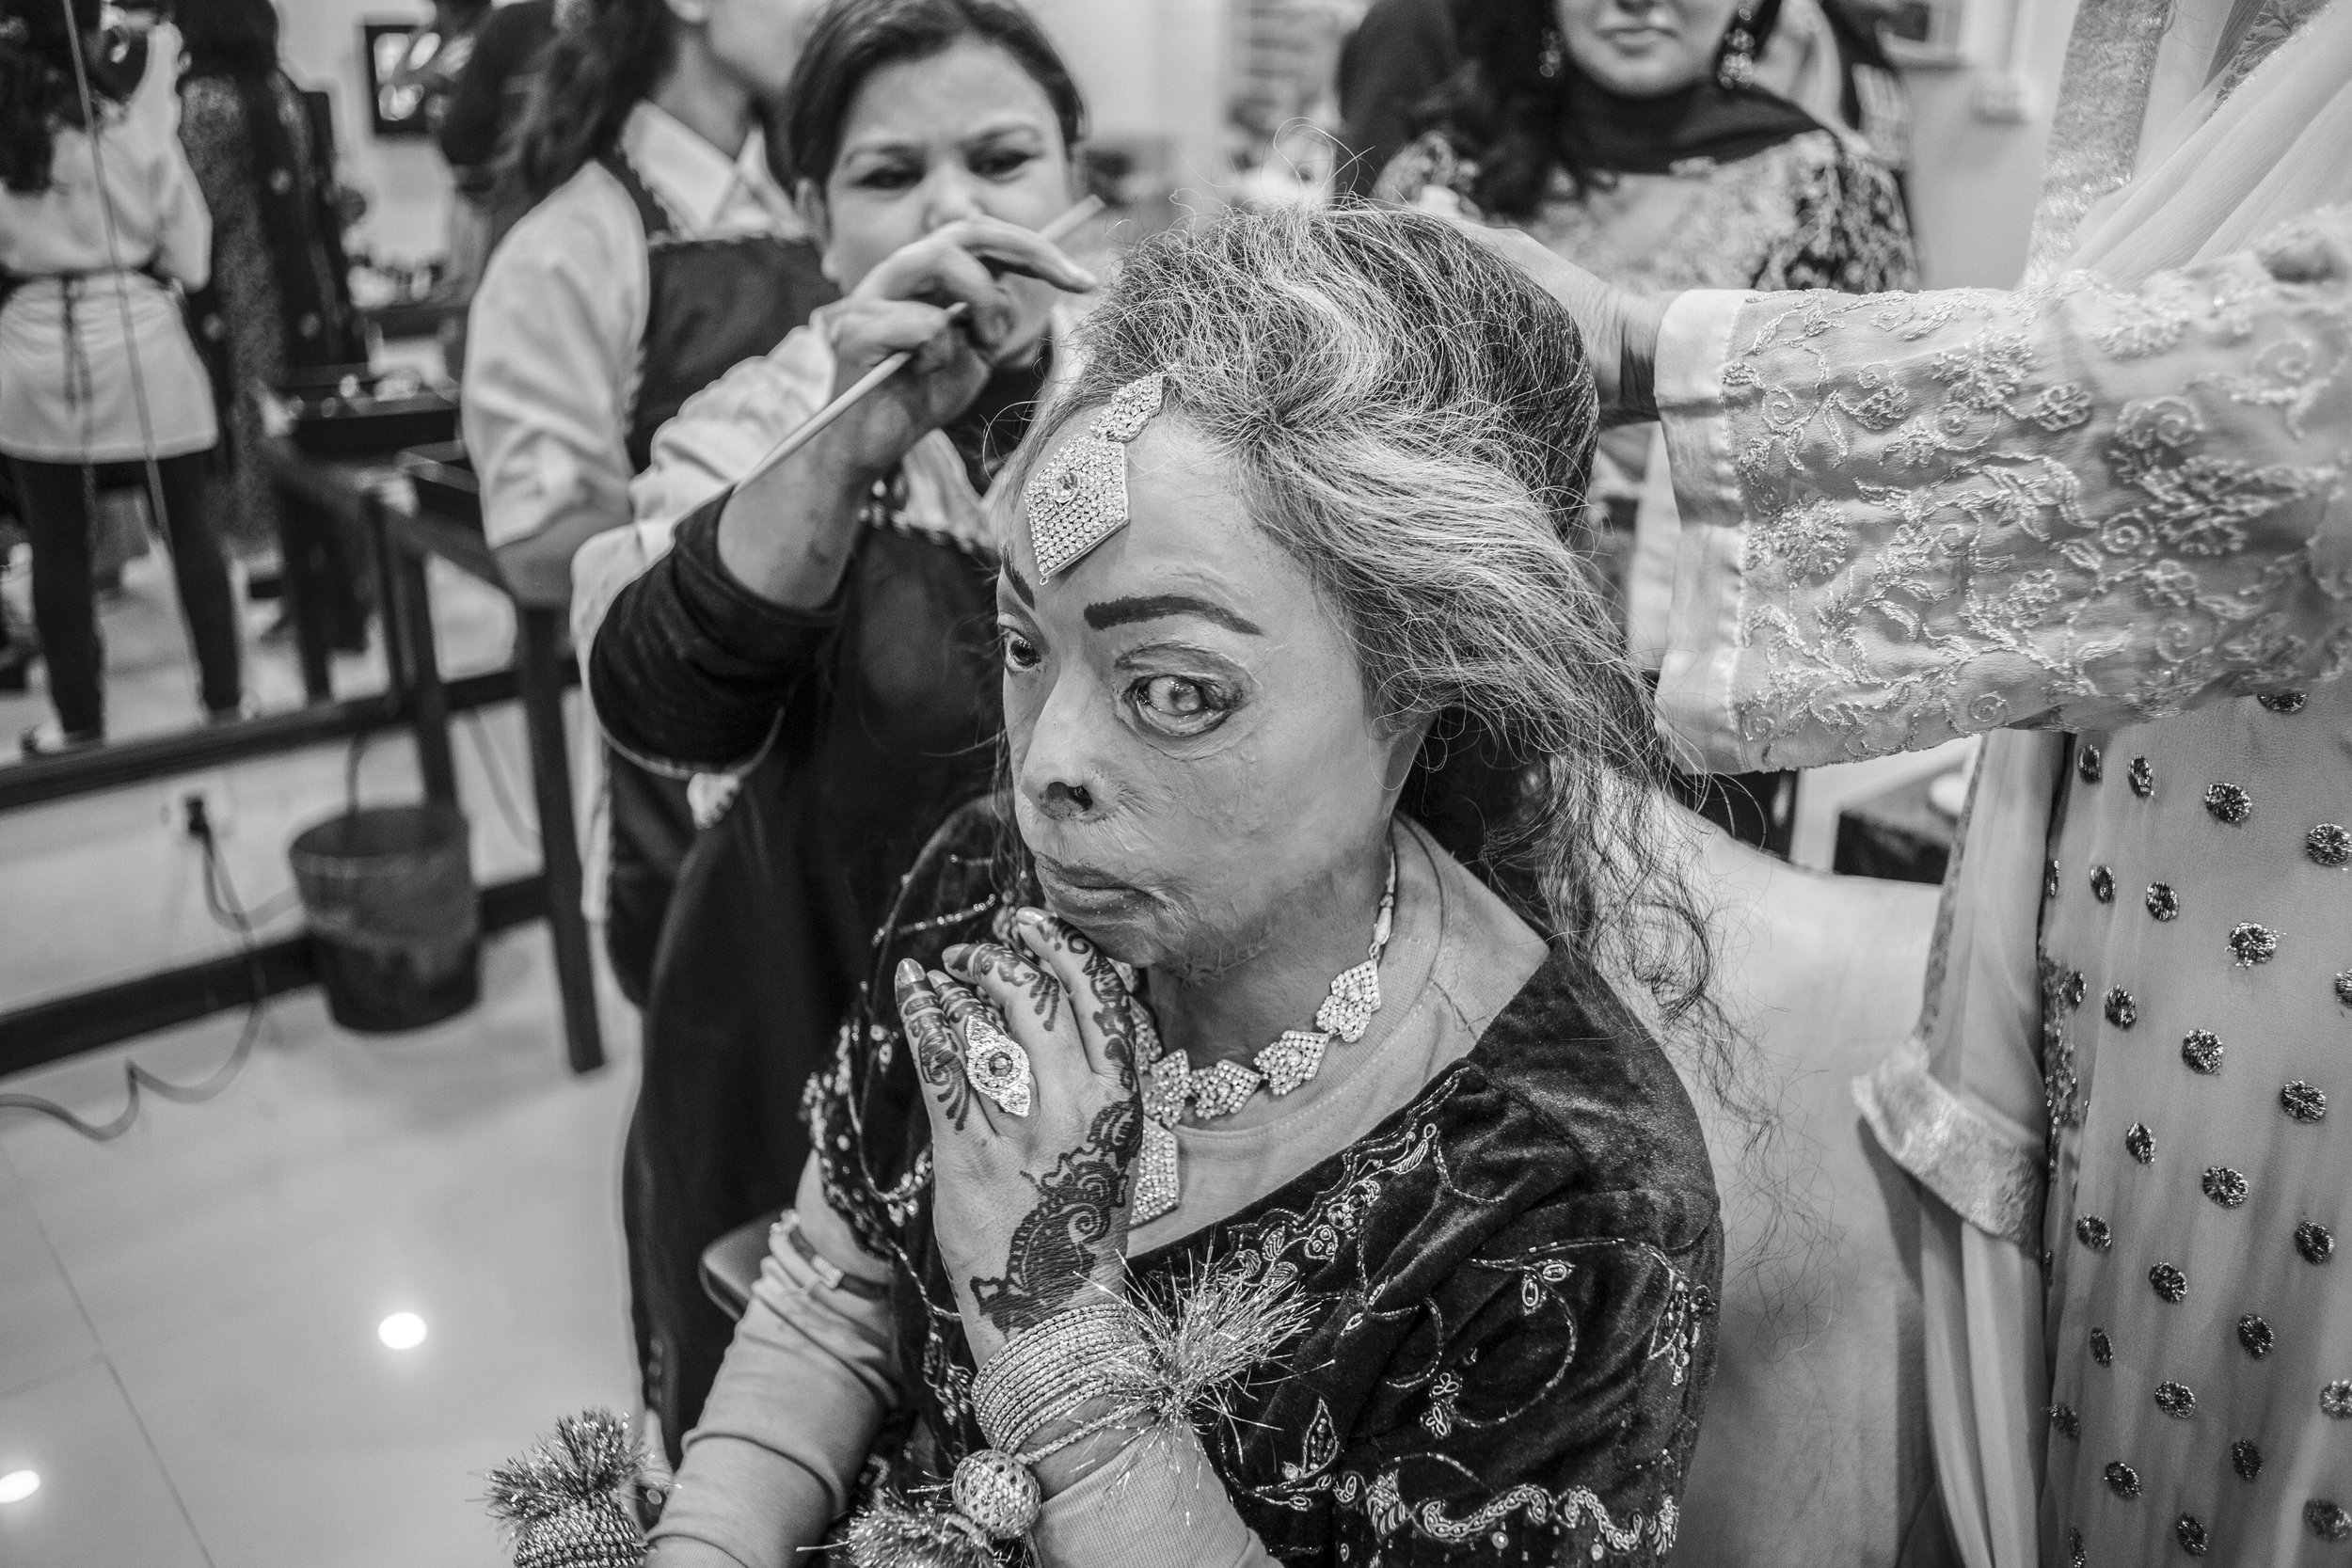  Sarwari Bibi, an acid attack survivor, gets dressed for her wedding ceremony at Depilex Salon, on Jan. 7, 2016 in Lahore, Pakistan. 